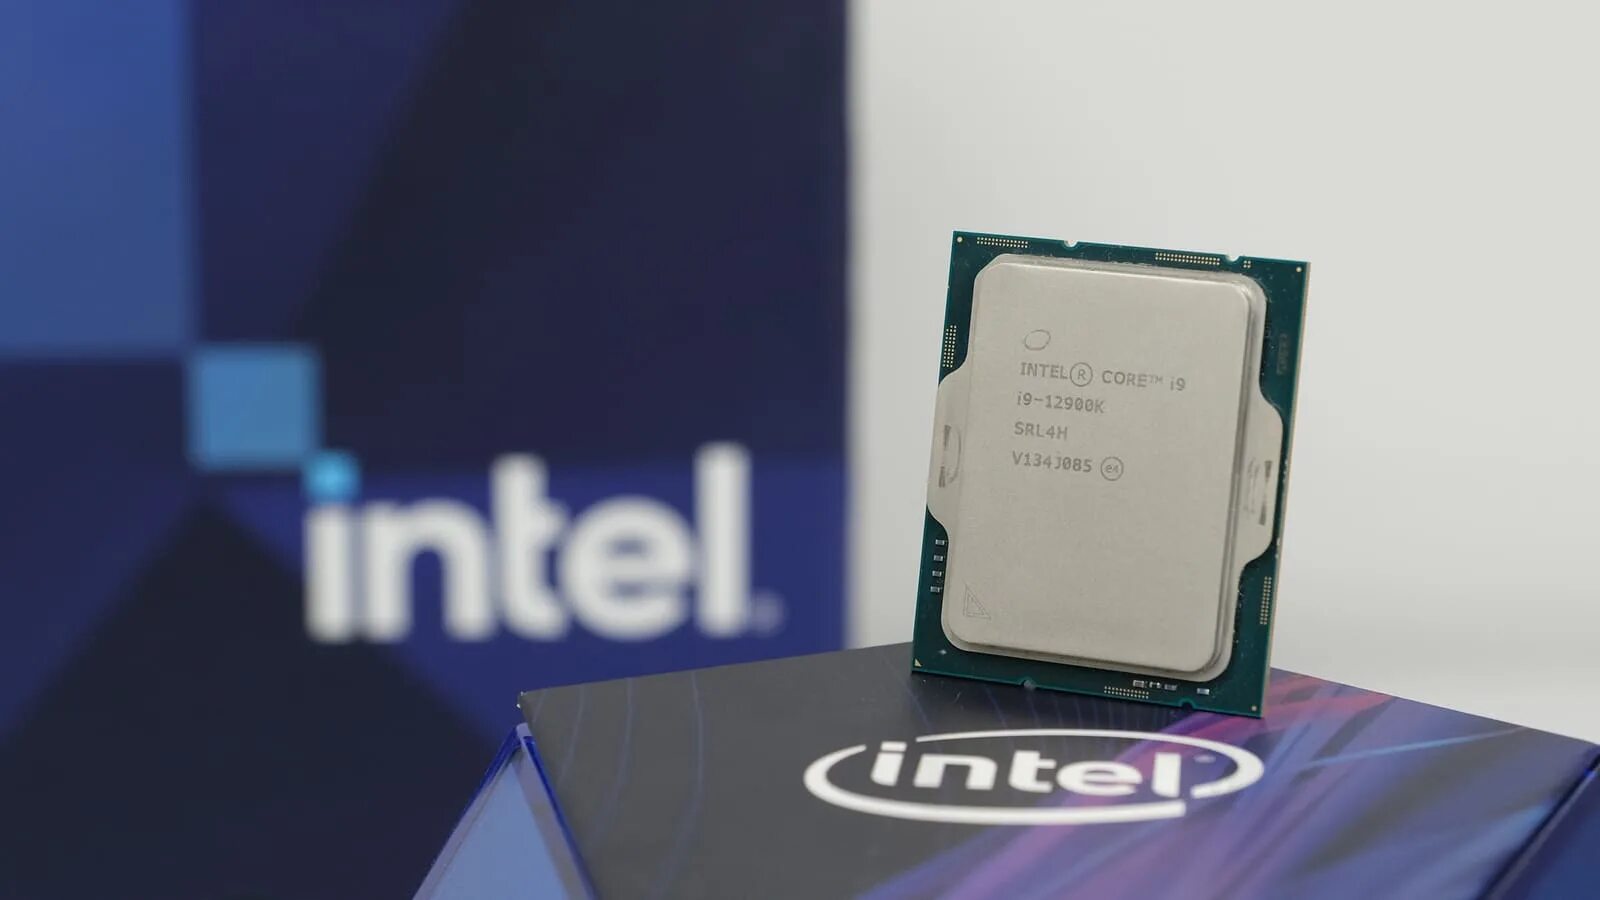 Intel core 12 поколения. Процессор Intel Core i9 12900k. Интел кор i9 12900к. Intel Core i9 12900k AMD Ryzen 9 5950x. Процессор Intel Core i9-12900k Box.